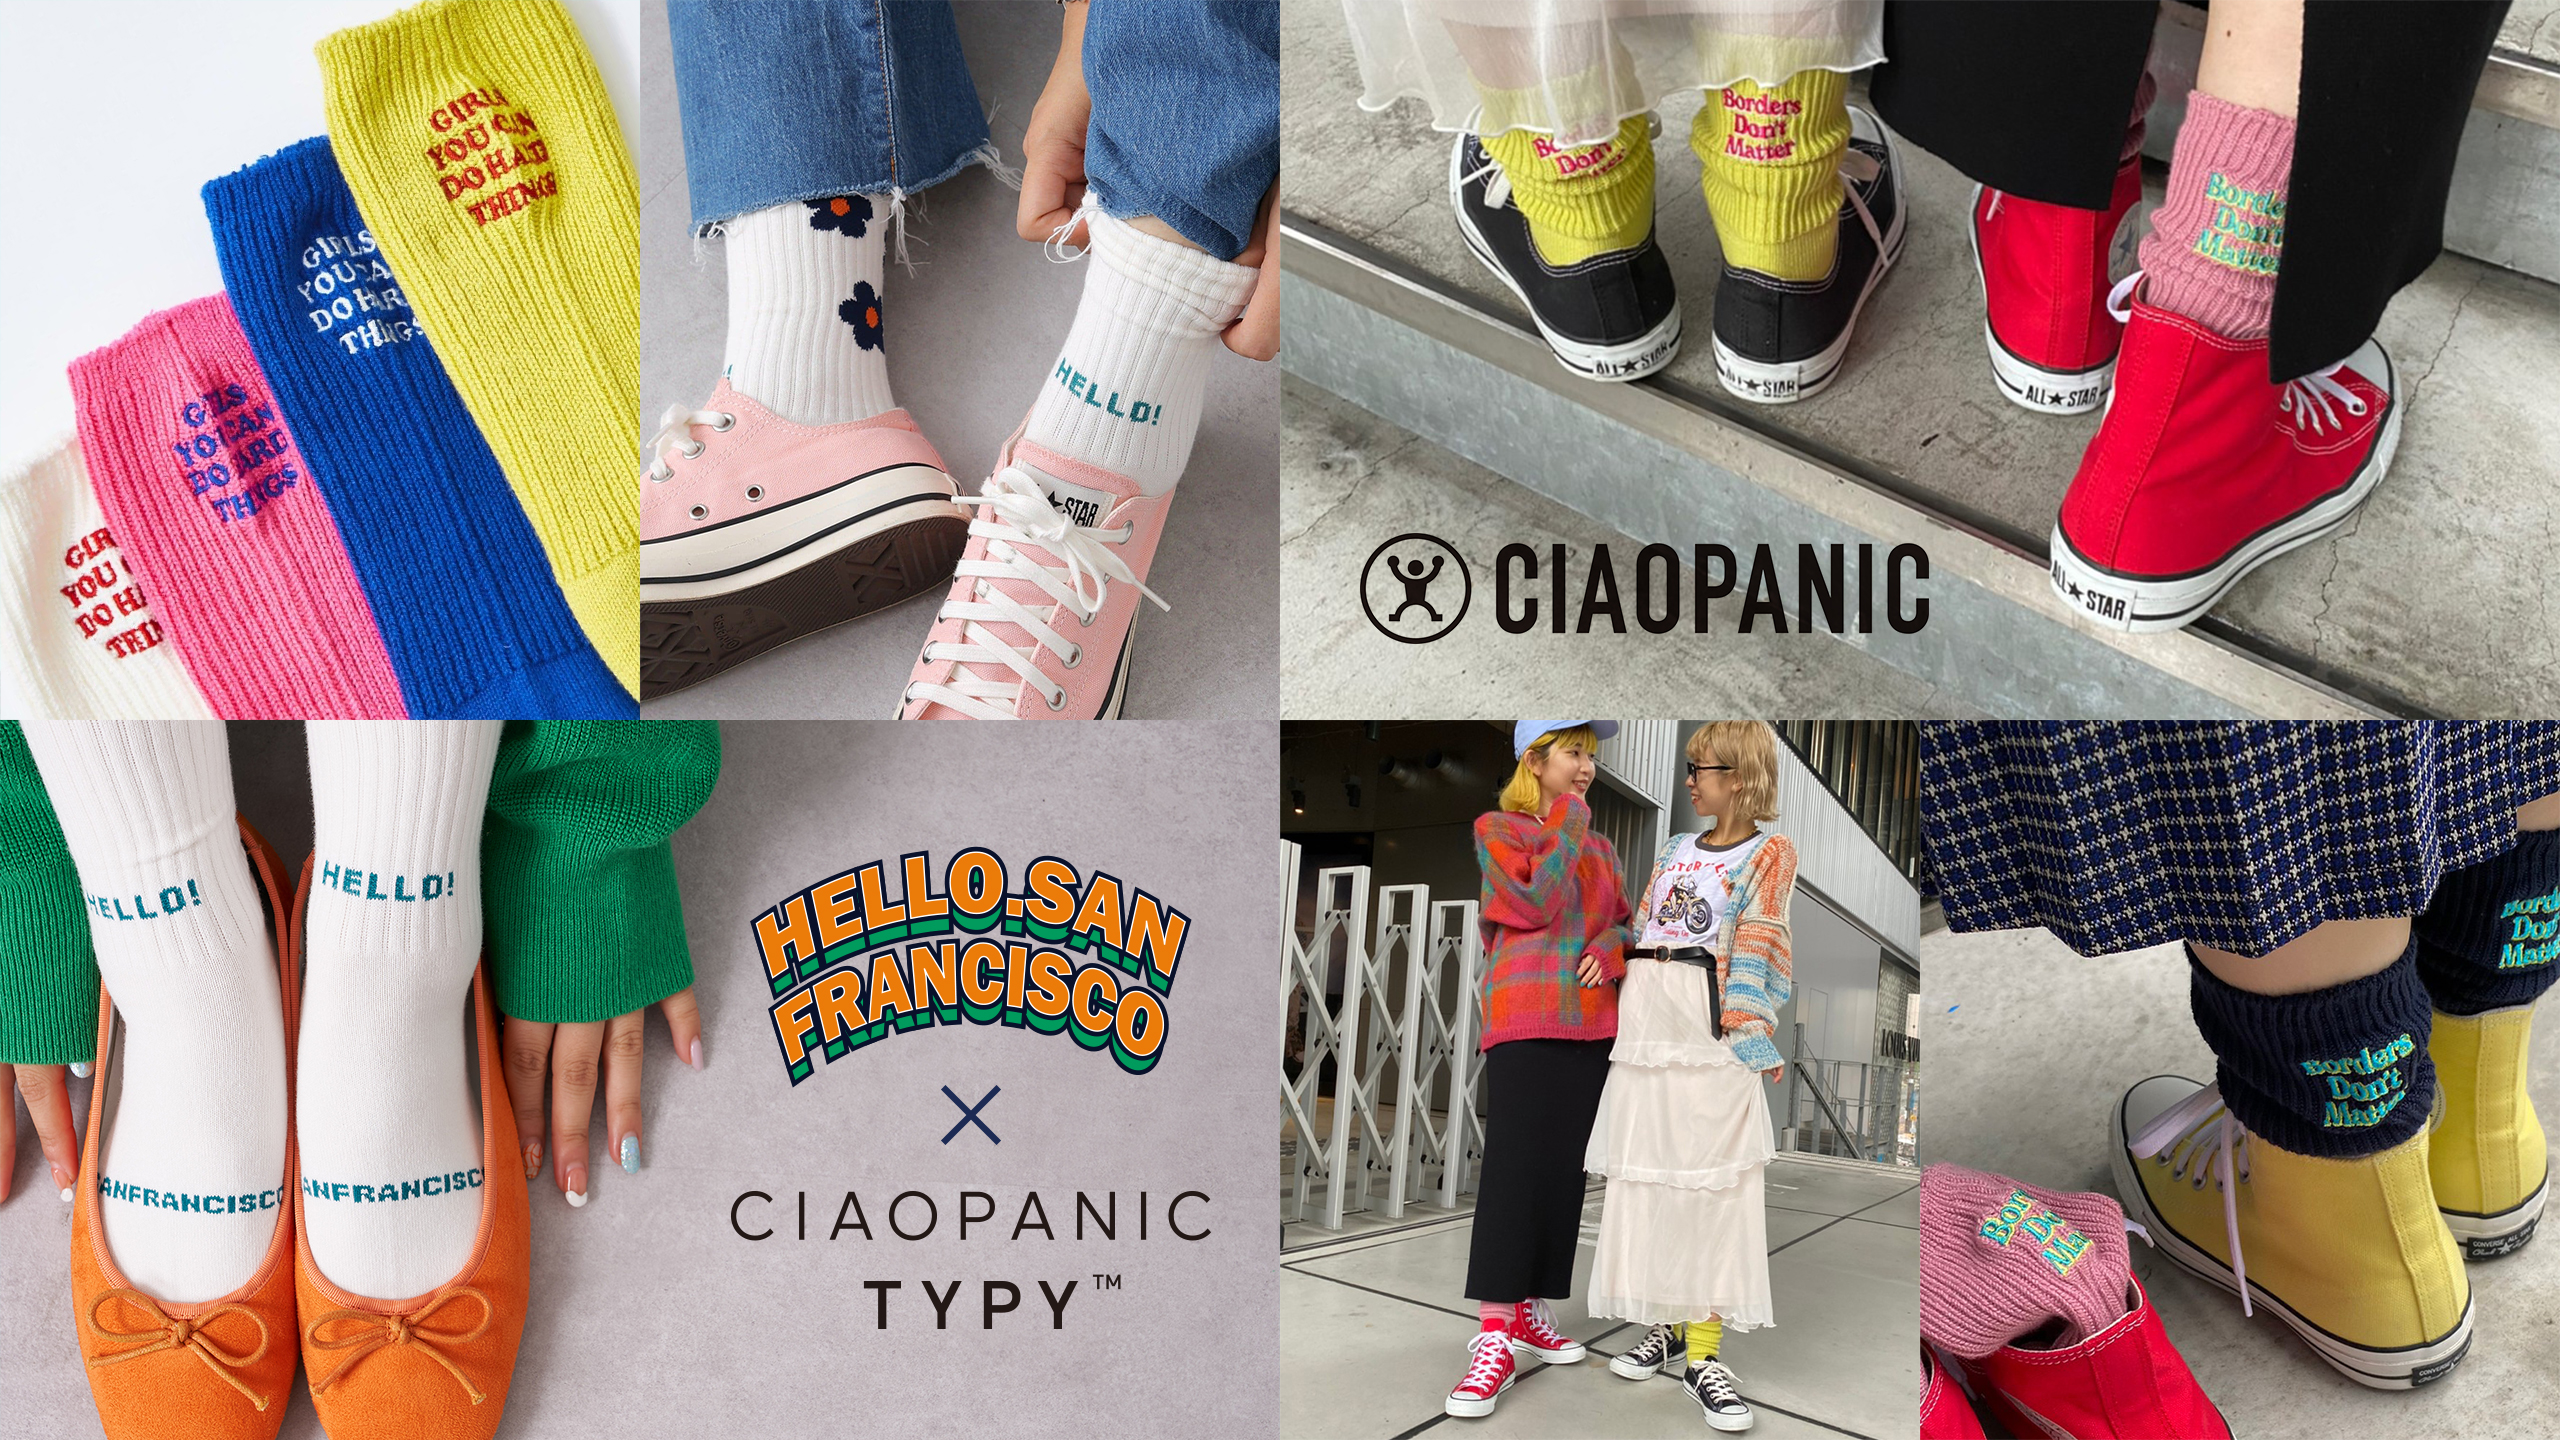 CIAOPANIC TYPY、CIAOPANICの2ブランドと靴下屋のコラボソックスが販売 